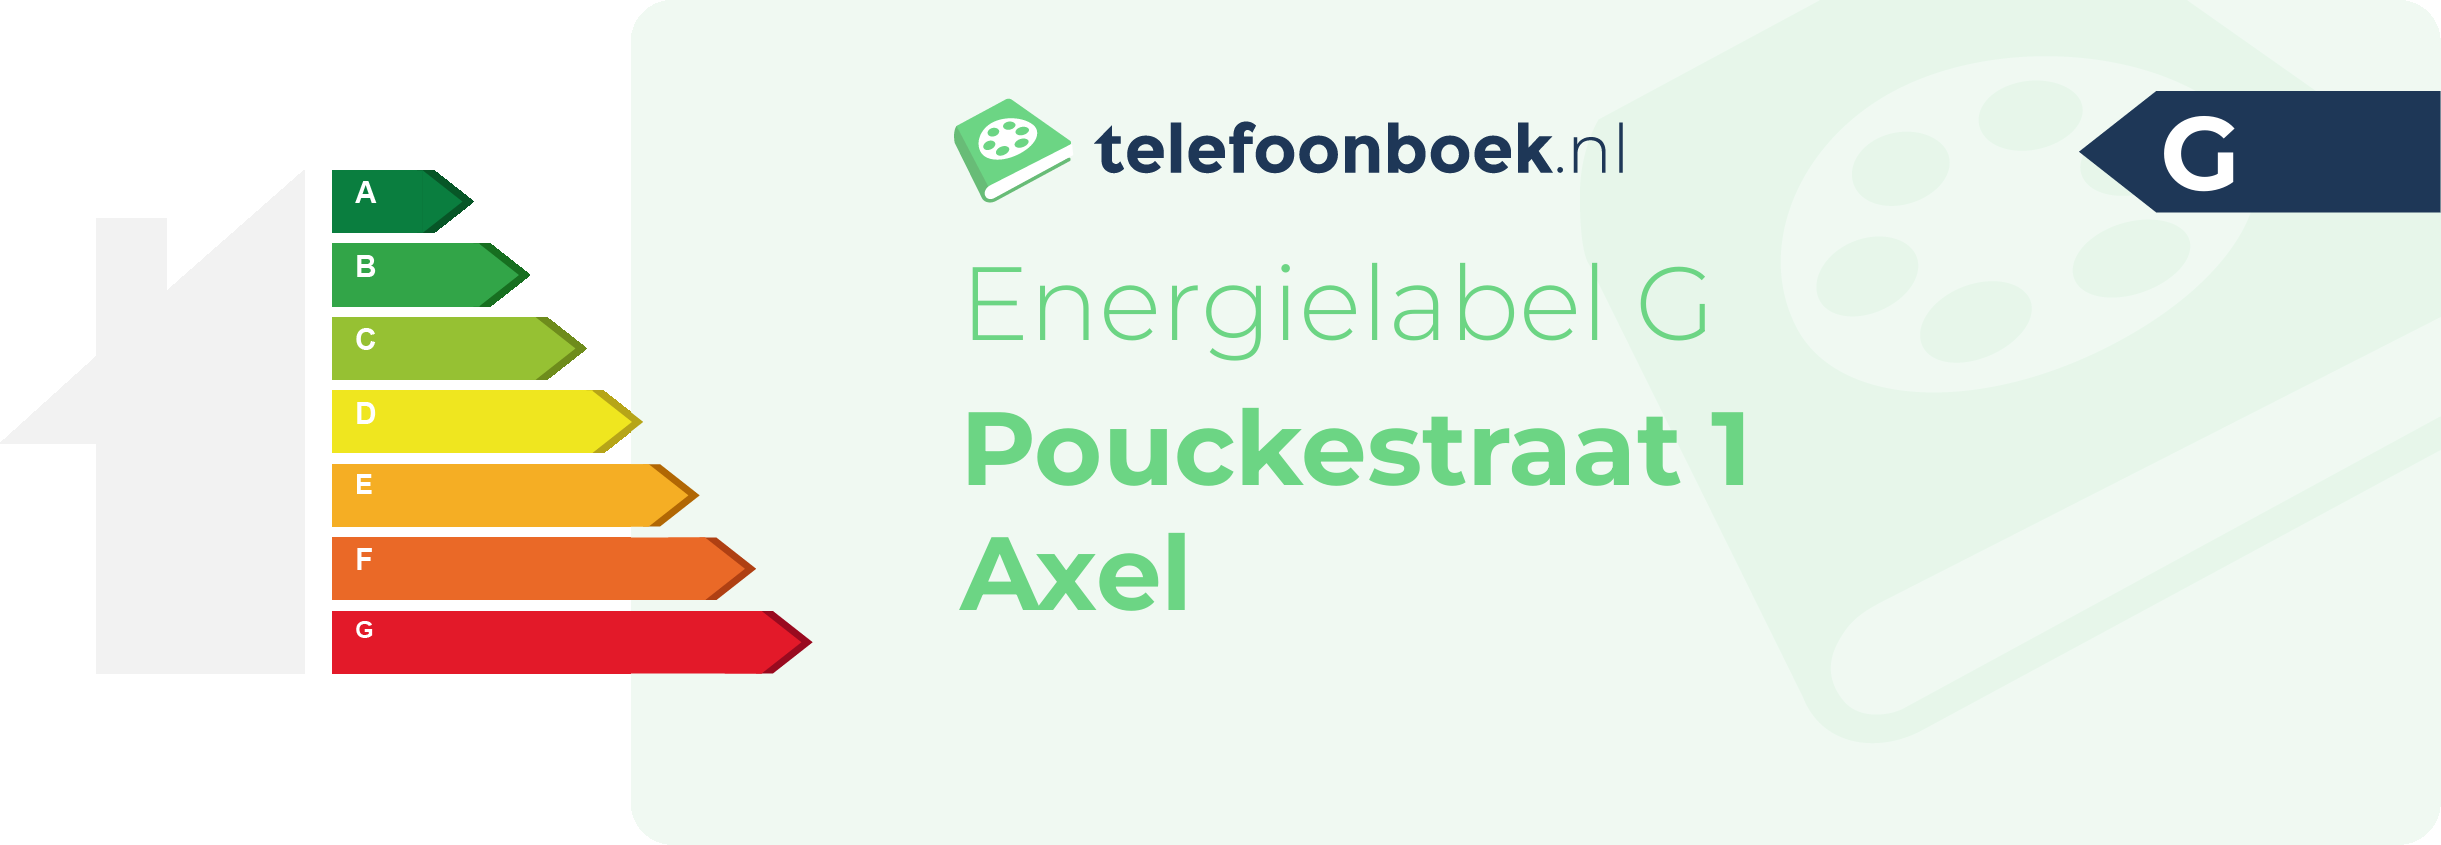 Energielabel Pouckestraat 1 Axel